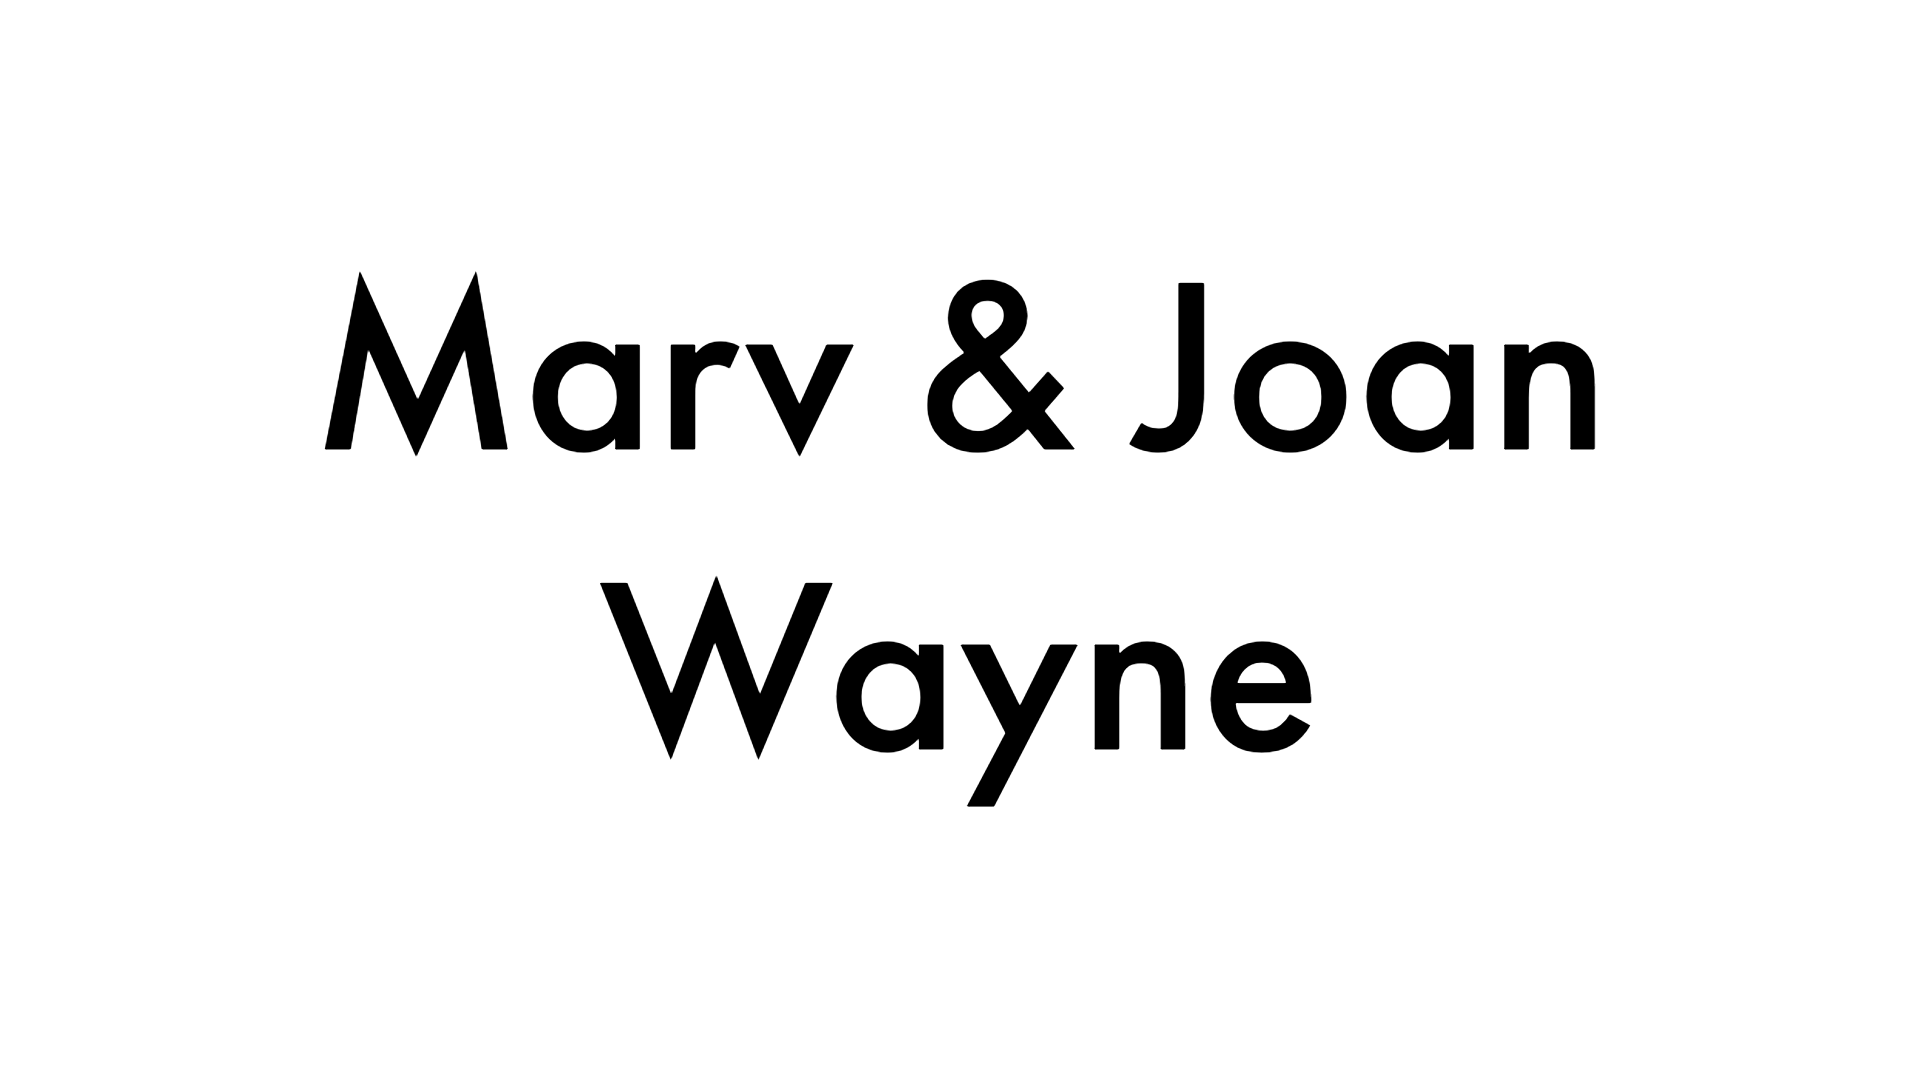 Marv & Joan Wayne